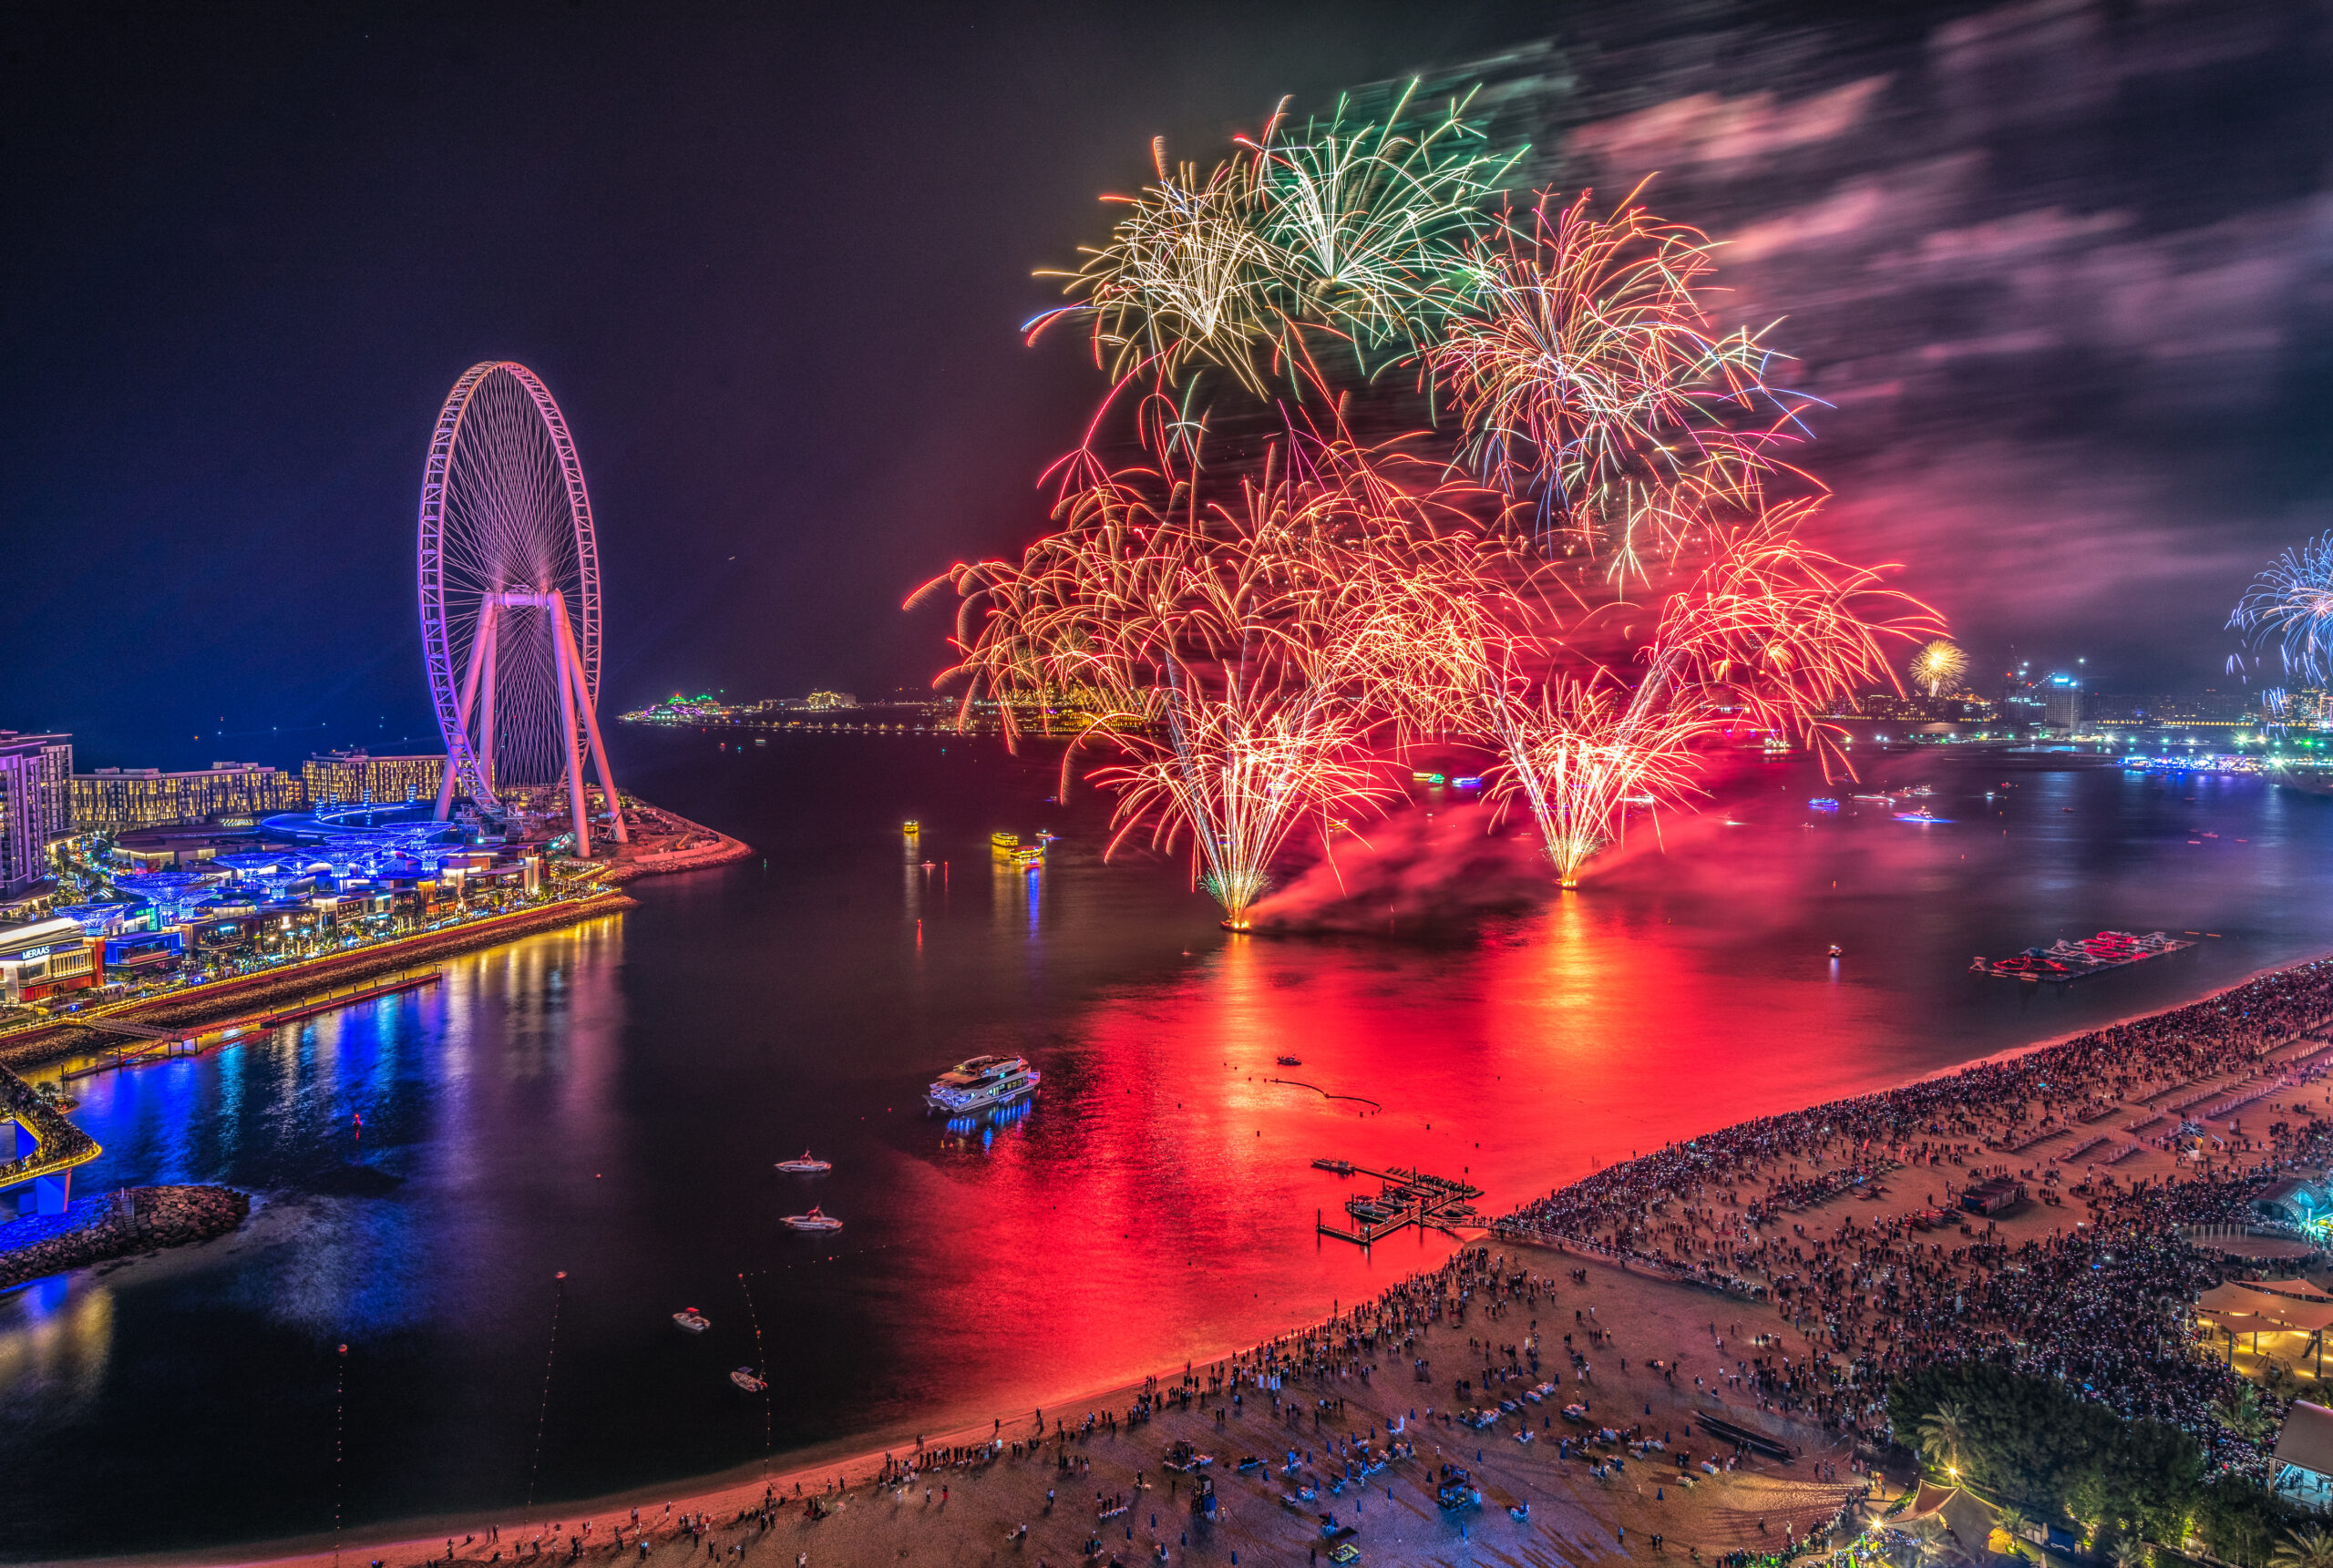 New Year in Dubai - Jumeirah Beach Residence fireworks